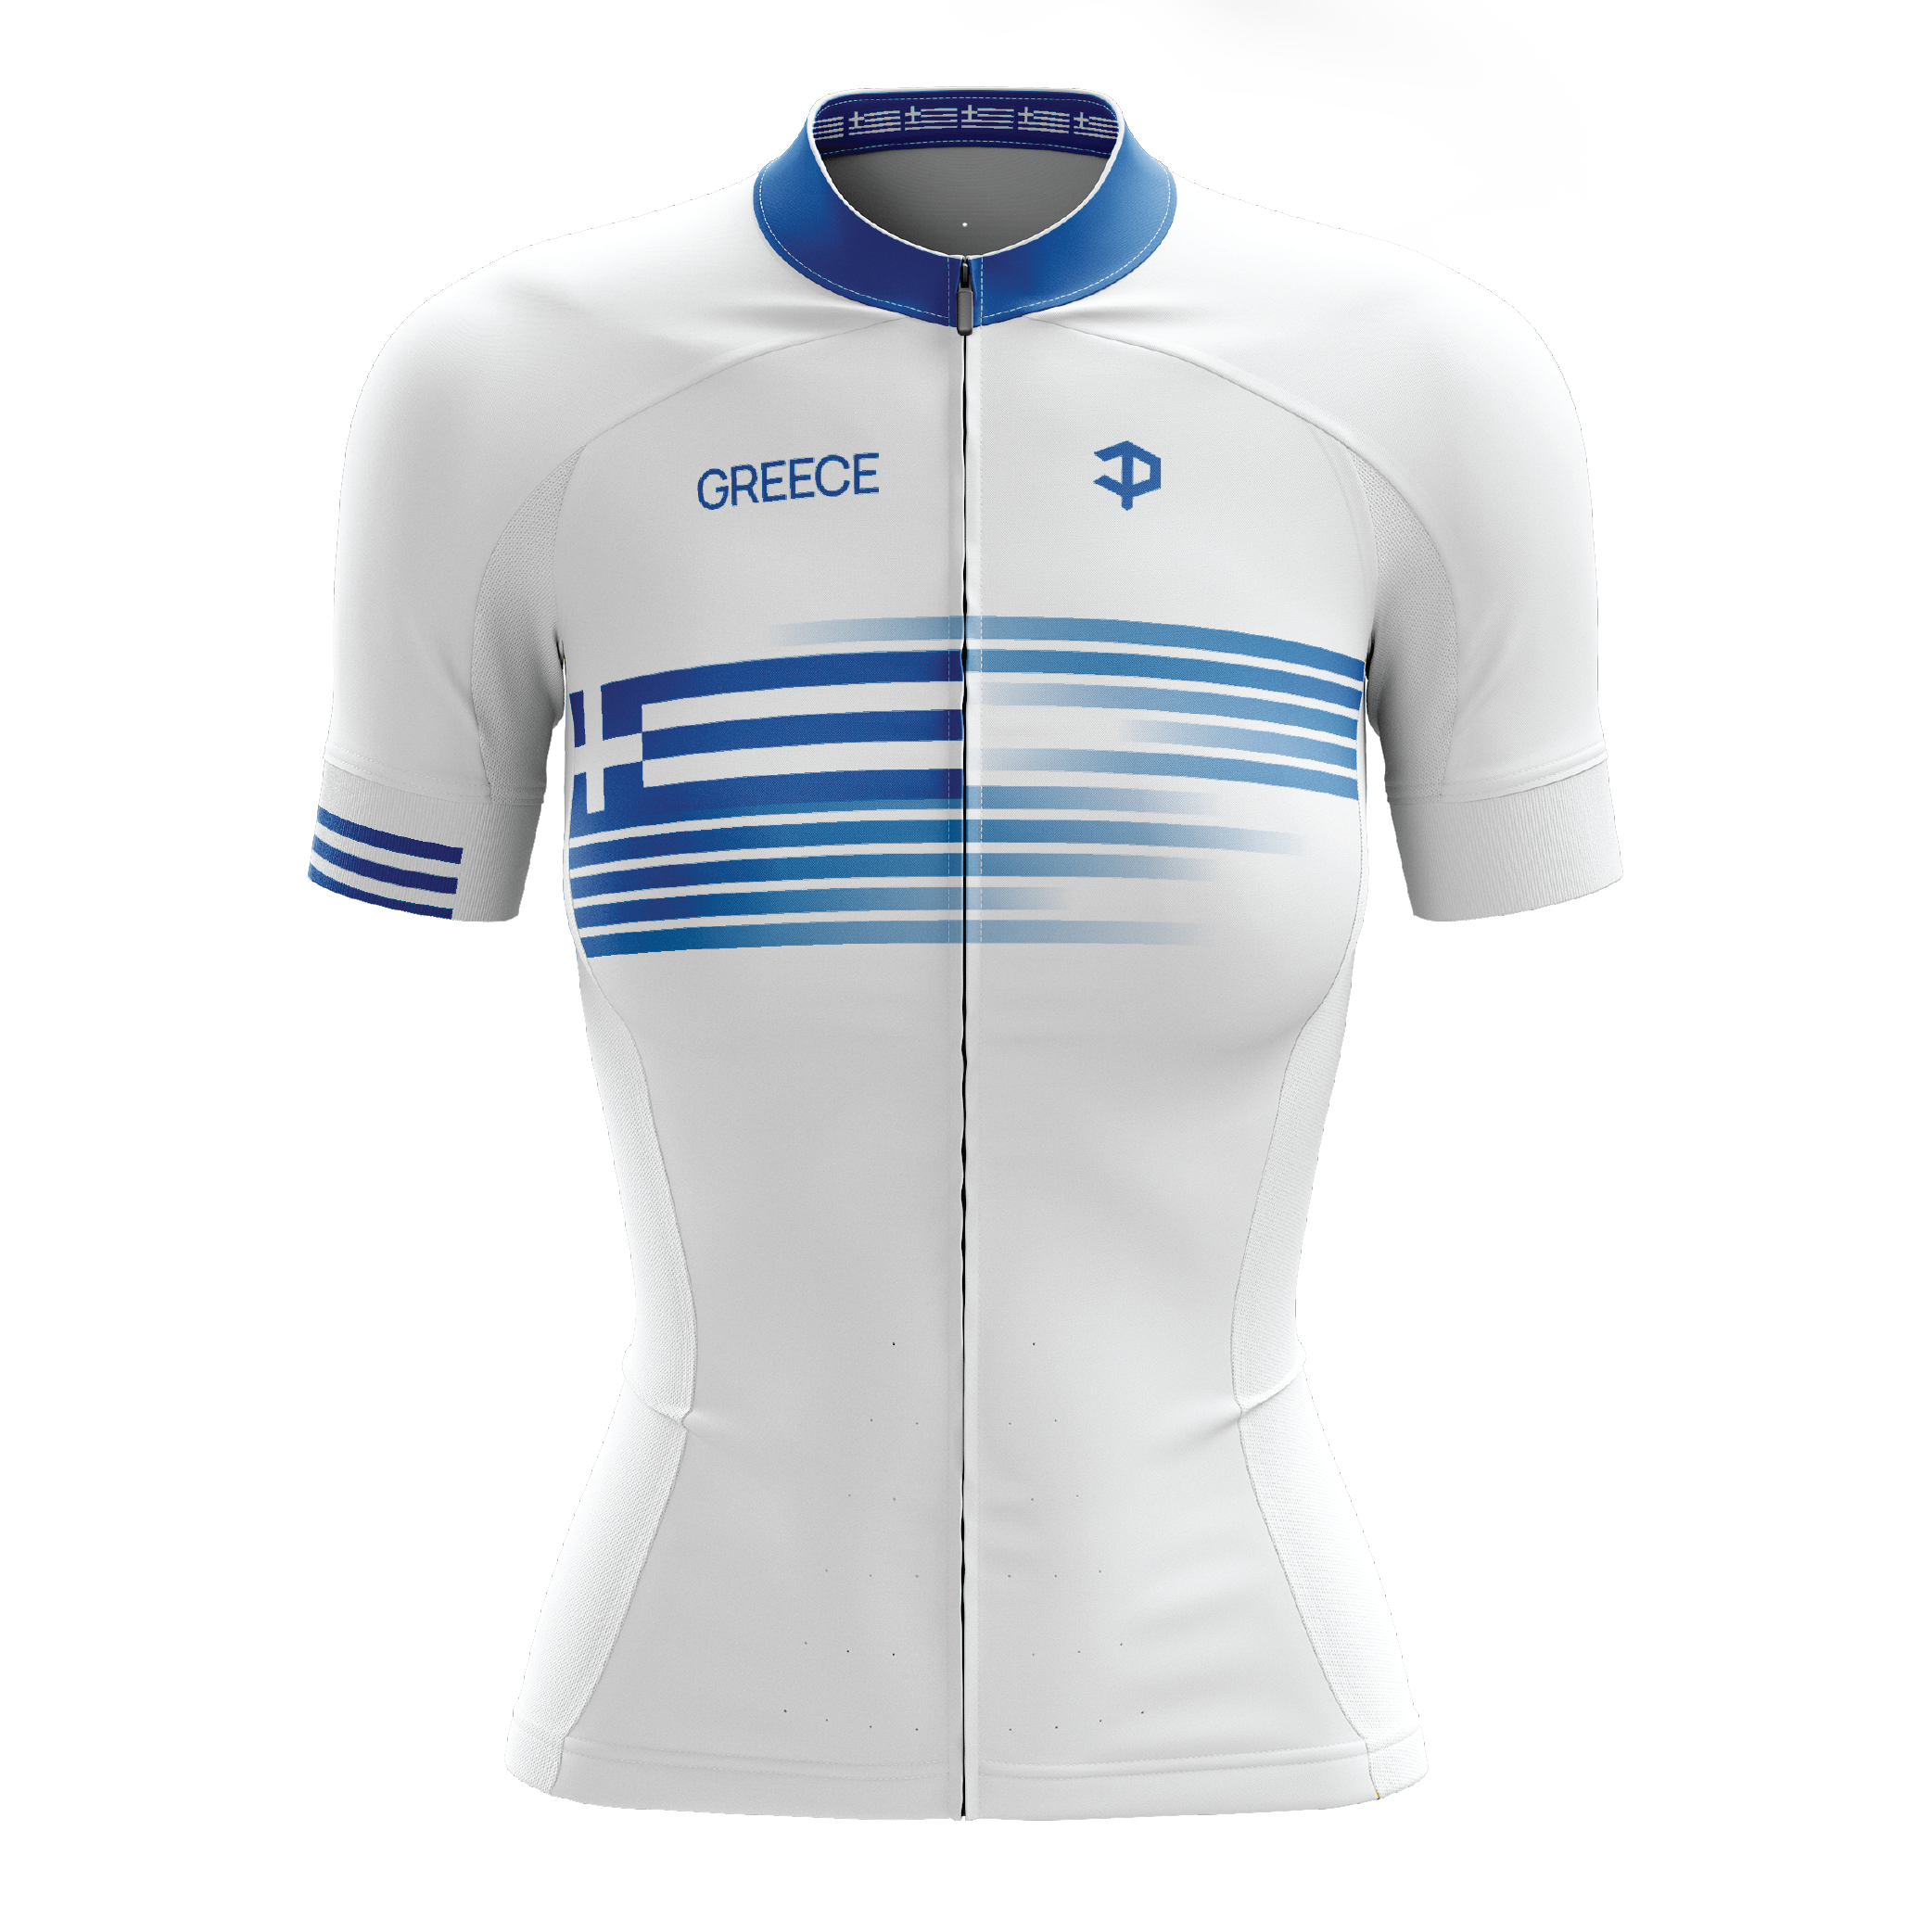 Greece Short Sleeve Cycling Jersey